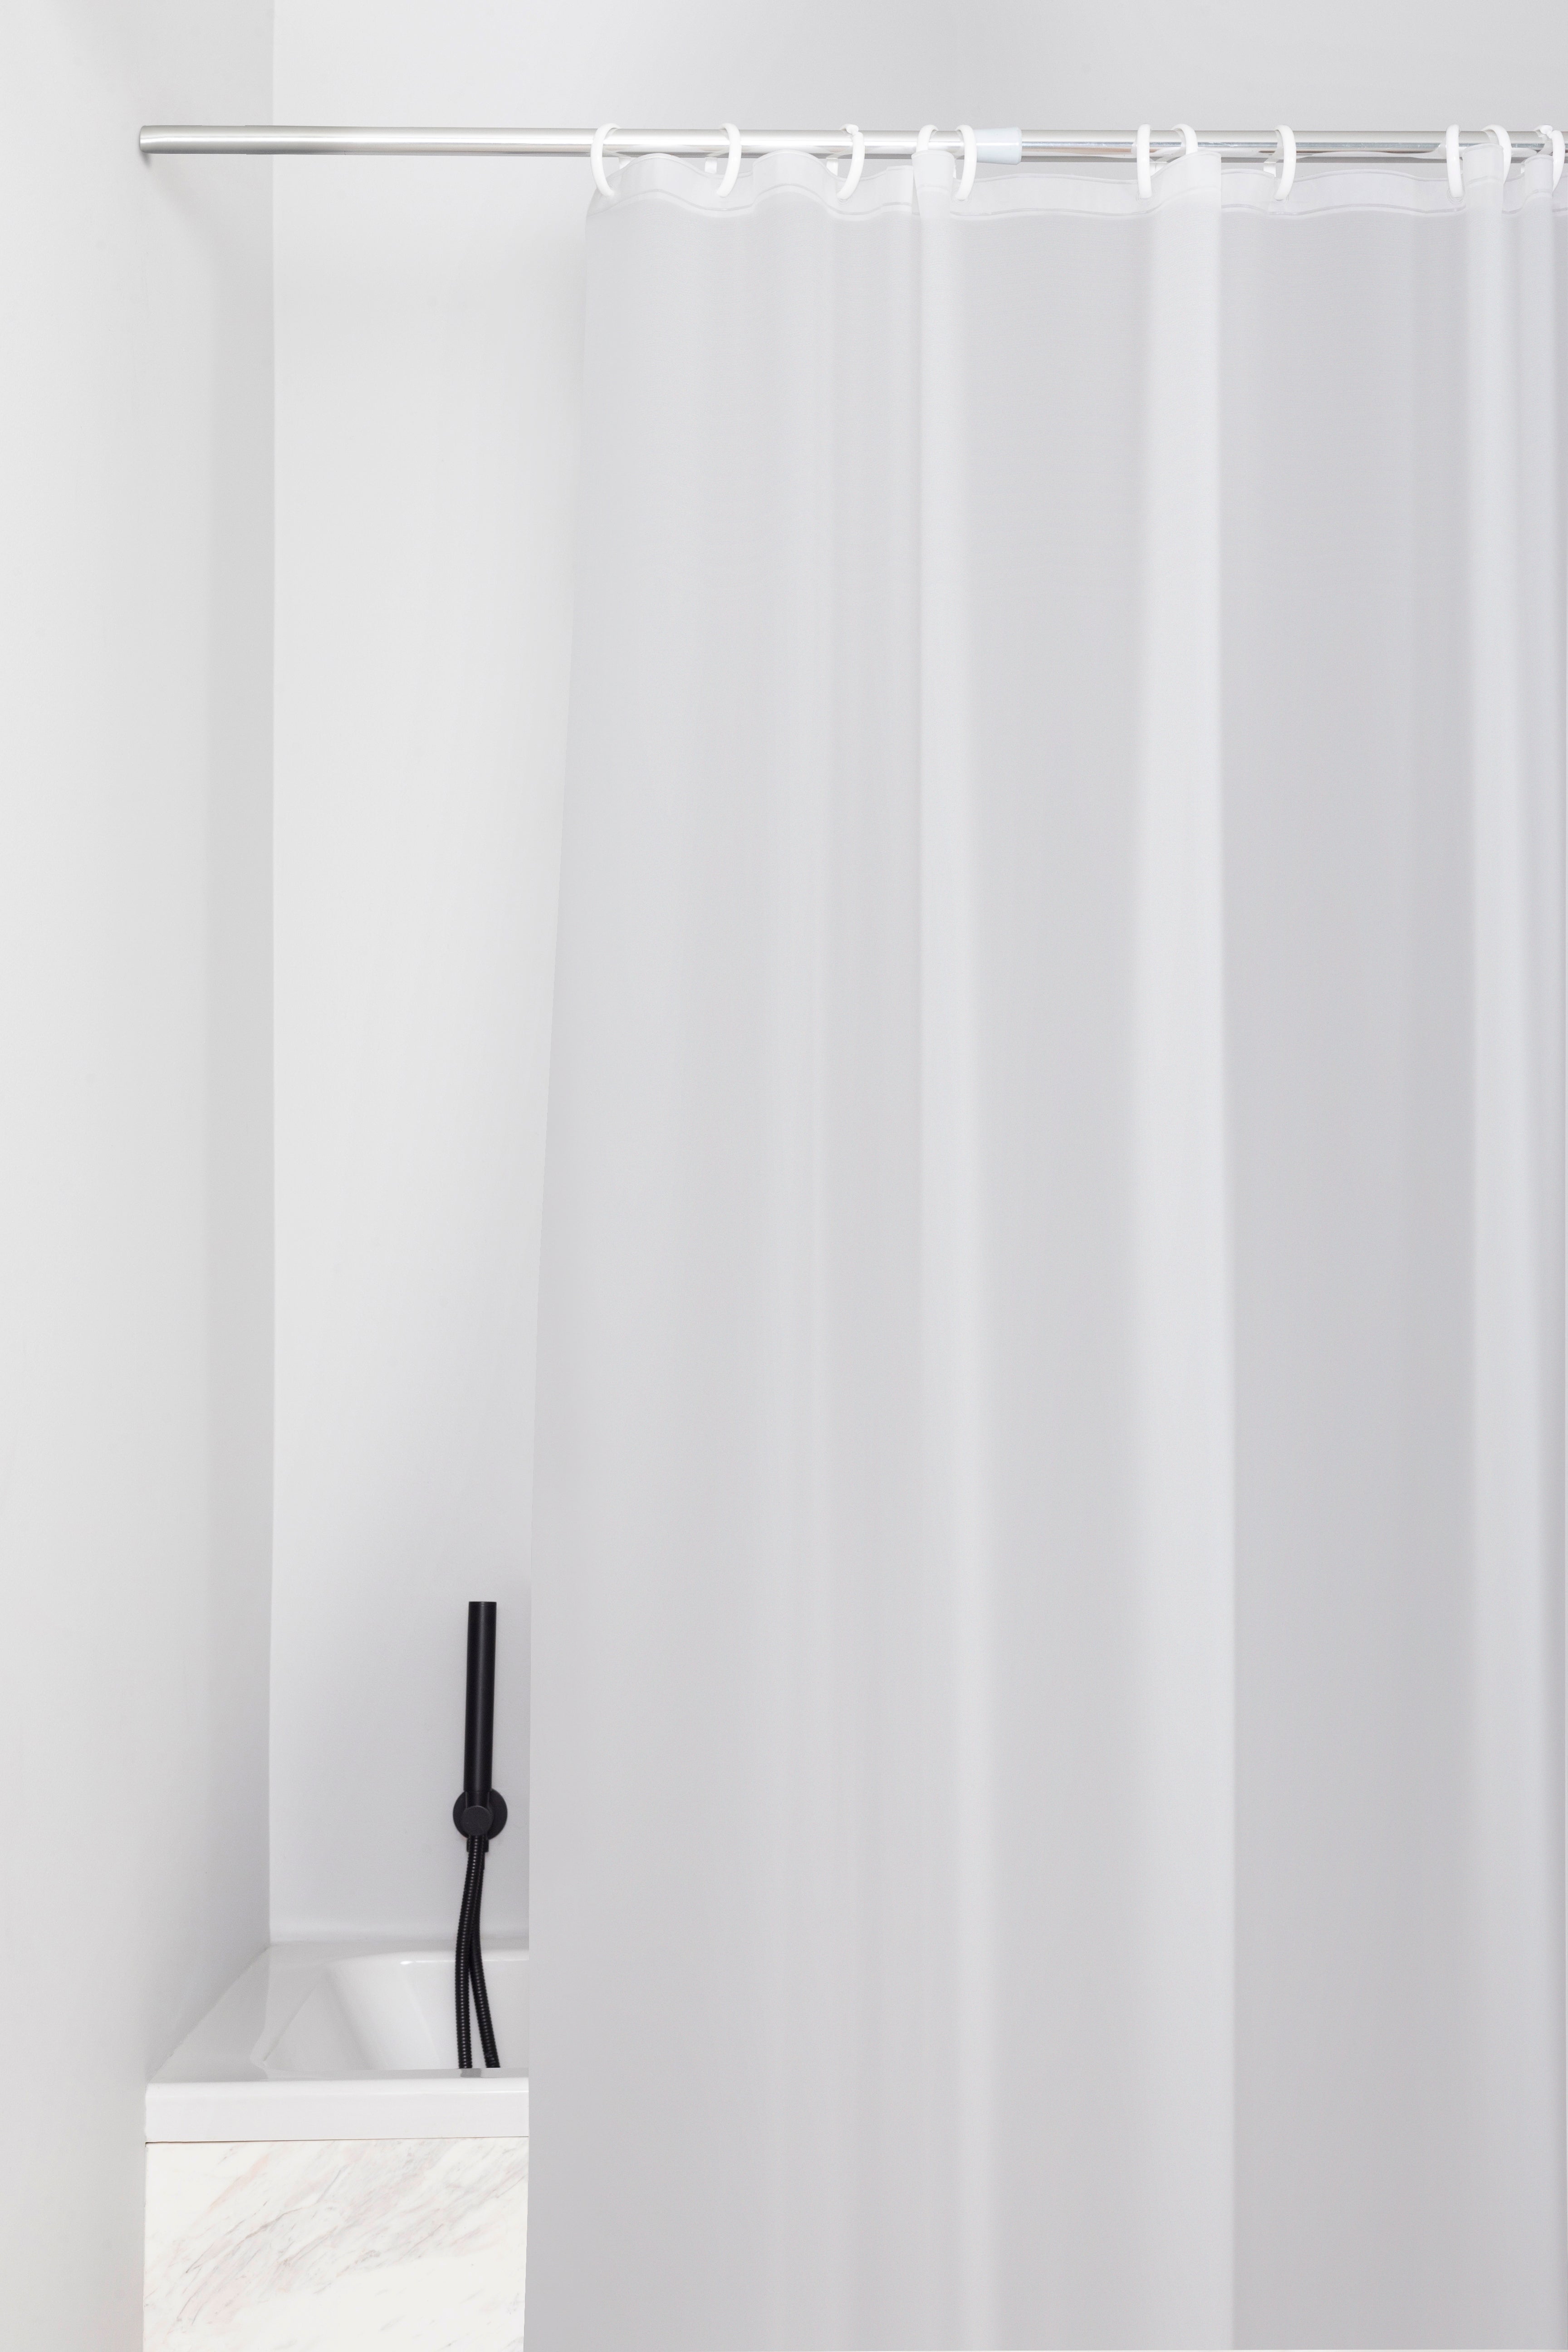 PEVA Shower Curtain Liner